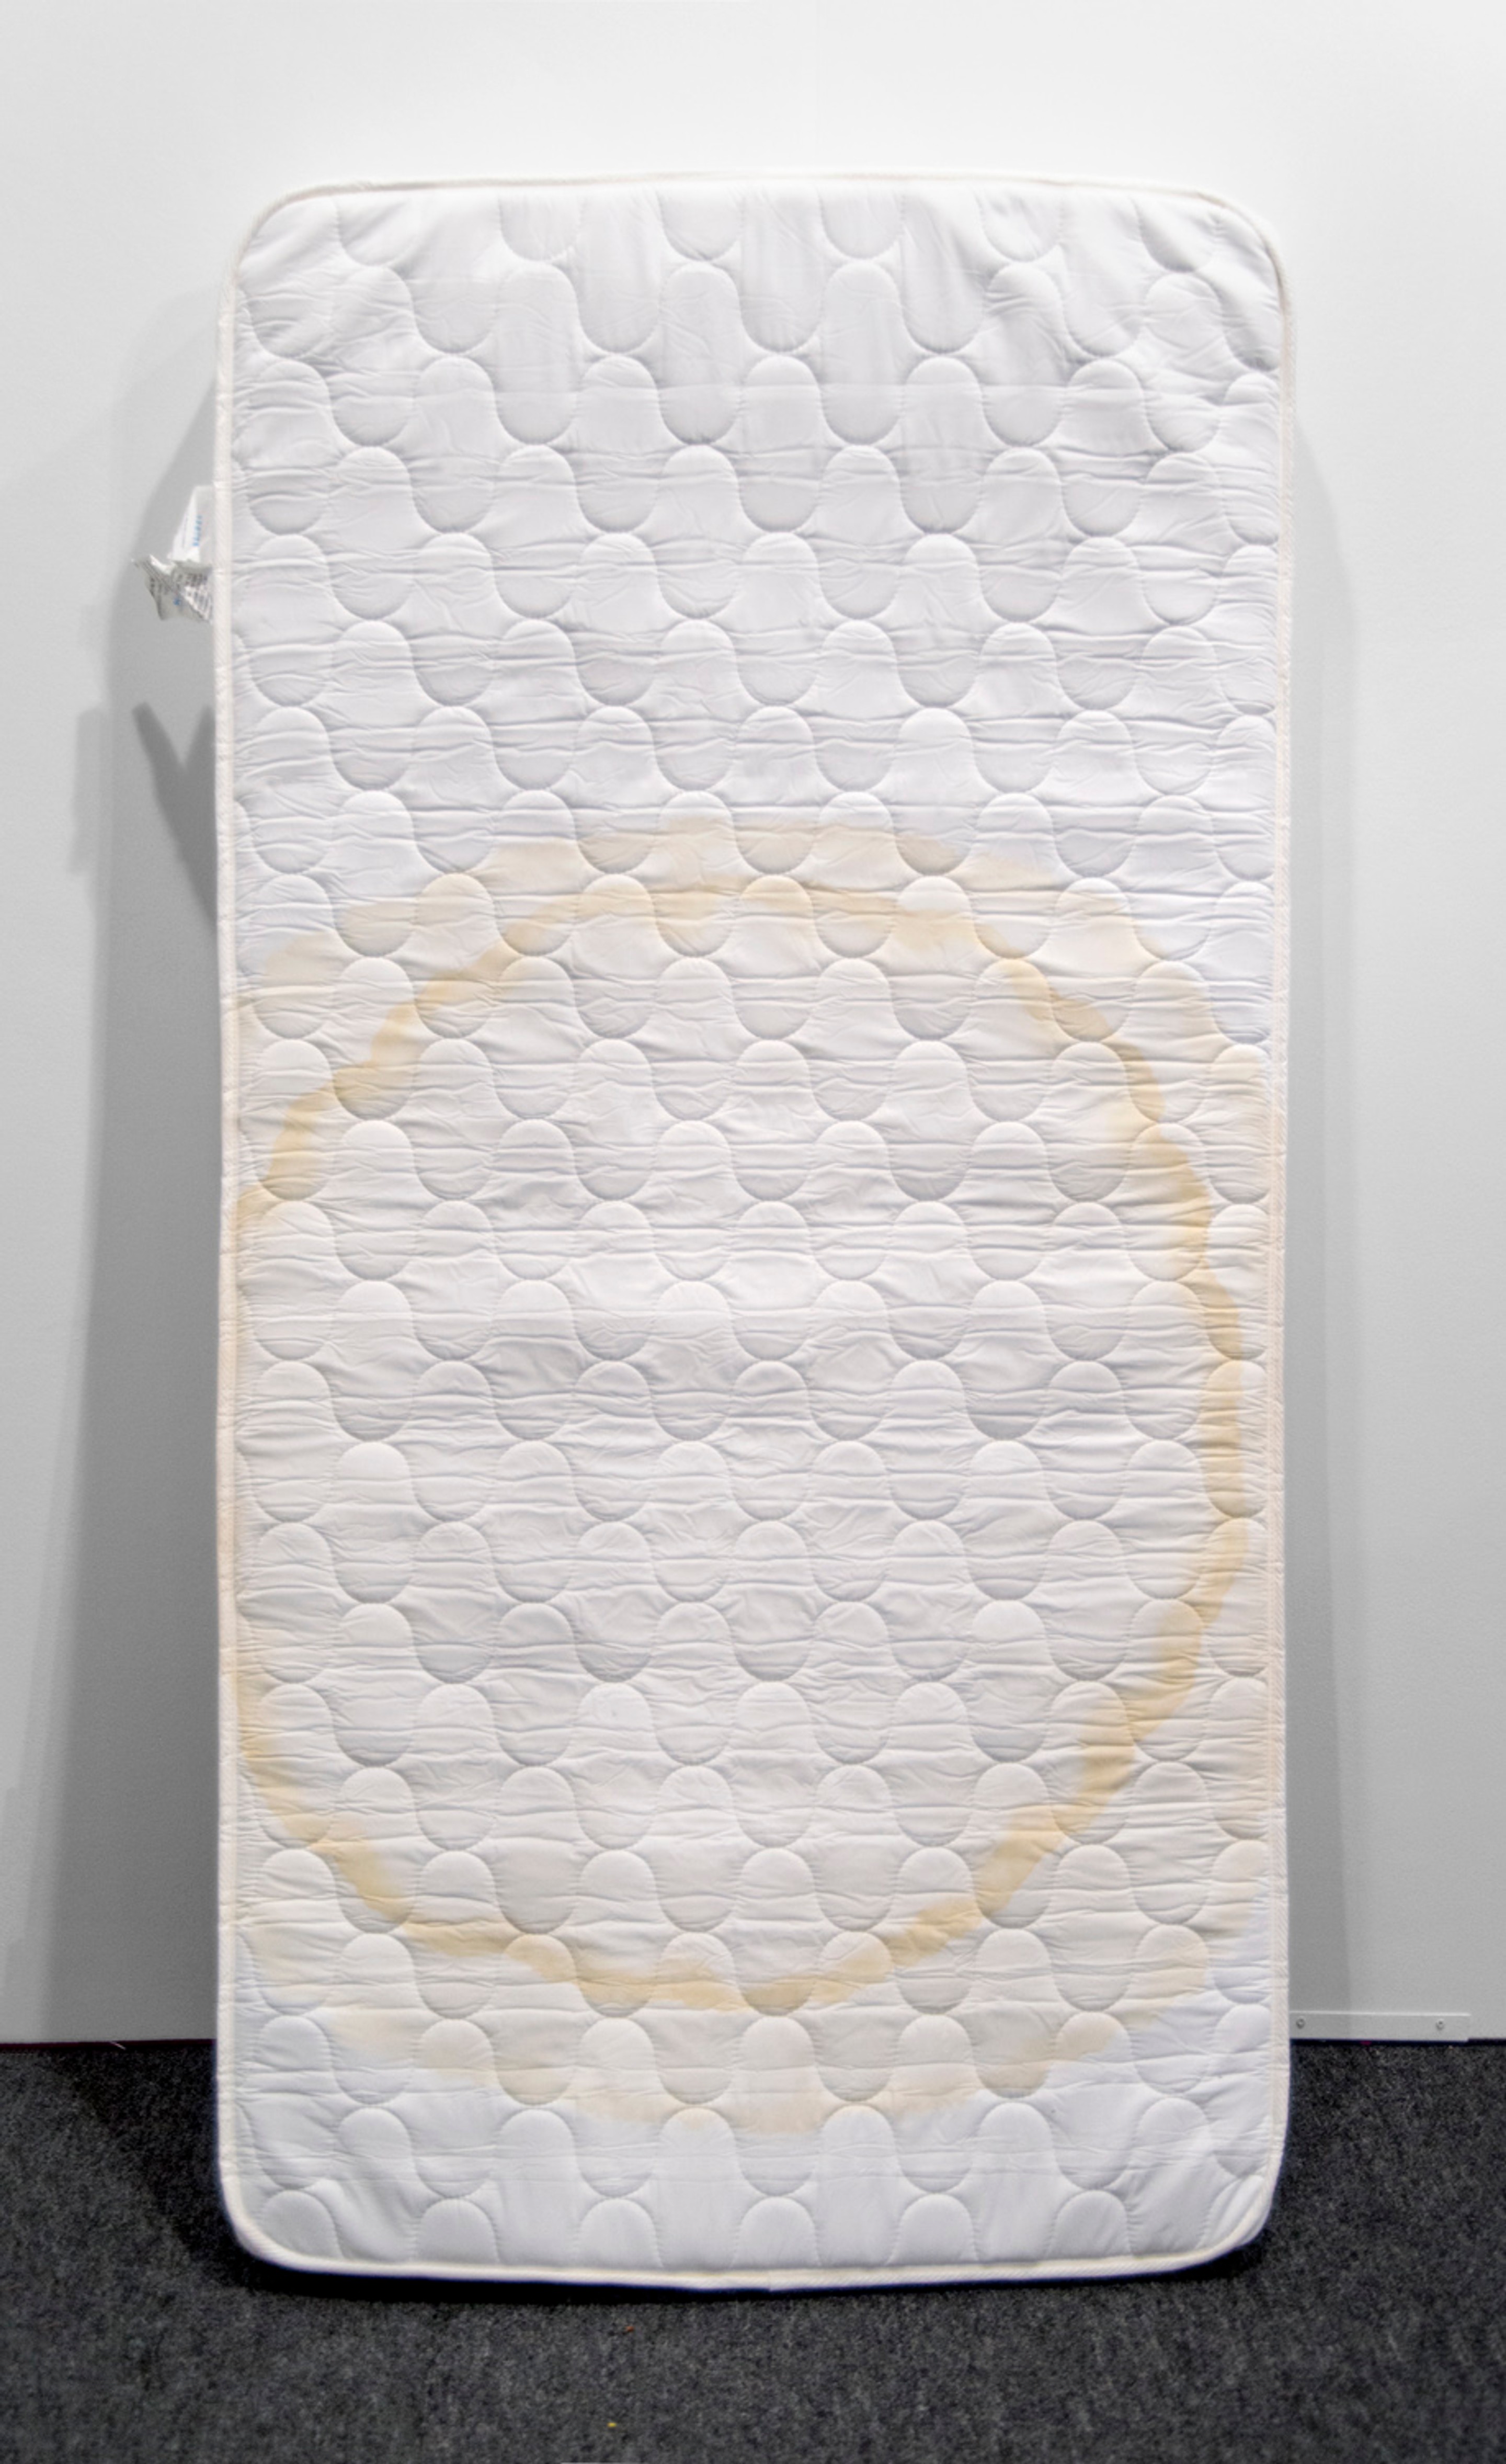 Bed Wetting, 2017
Twin Mattress, Urine
78 x 38 x 10 inches